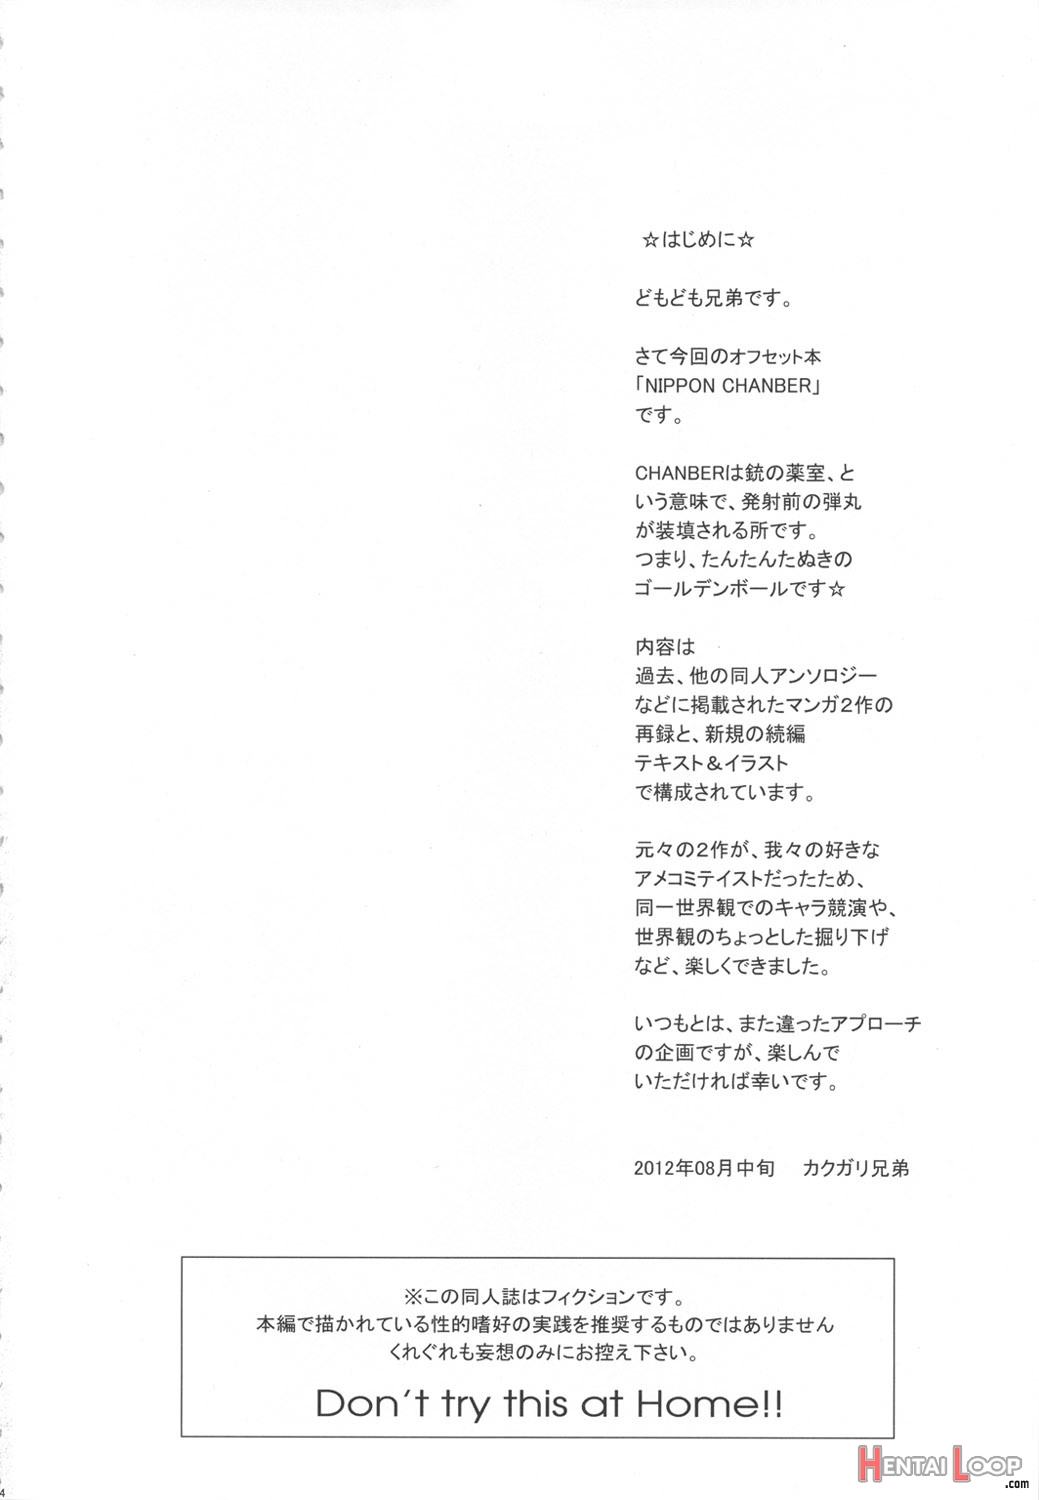 Nippon Chamber page 4